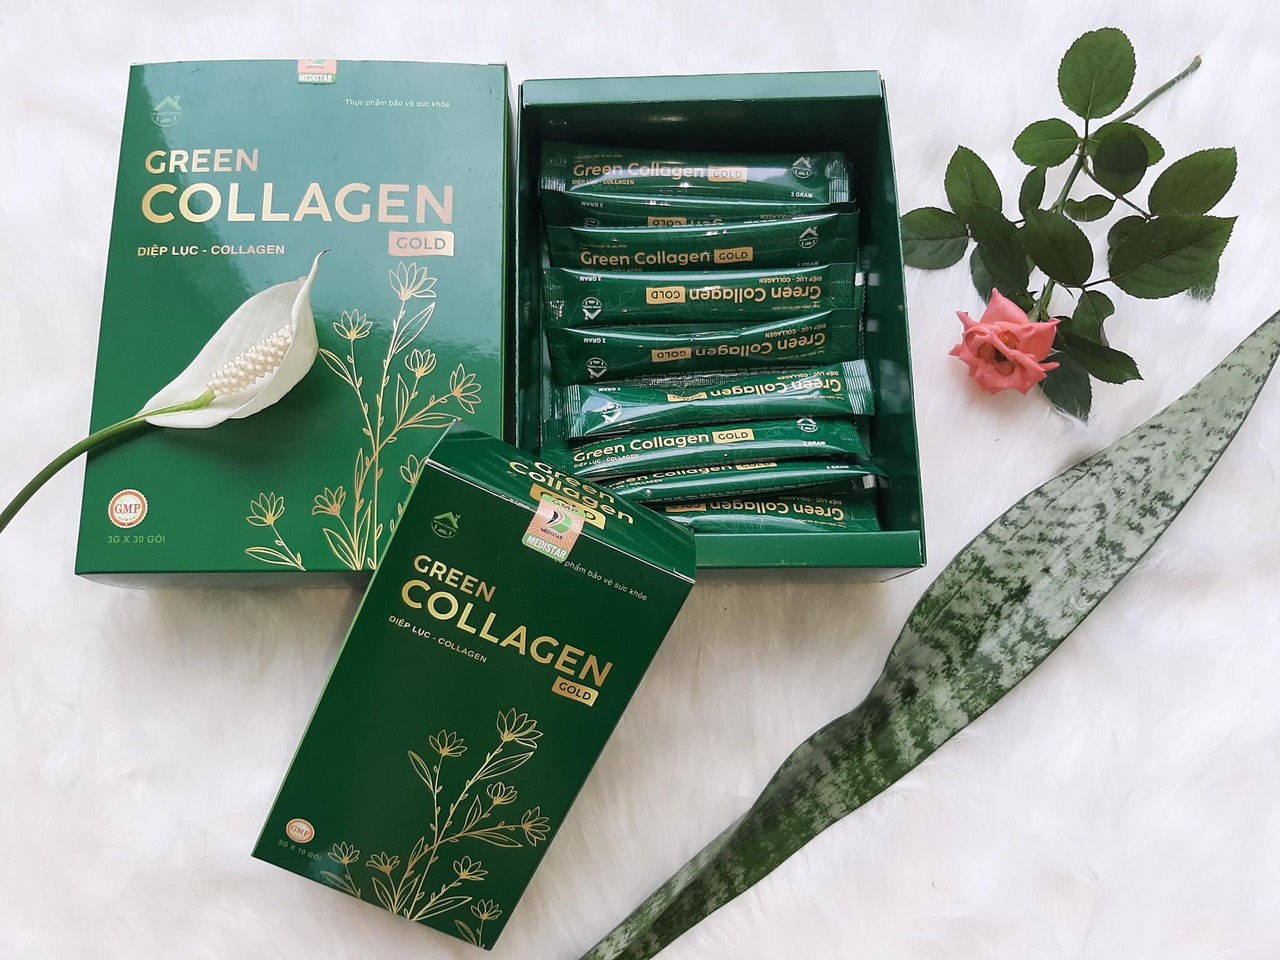 Diệp lục Collagen Gold 30 gói Green Family